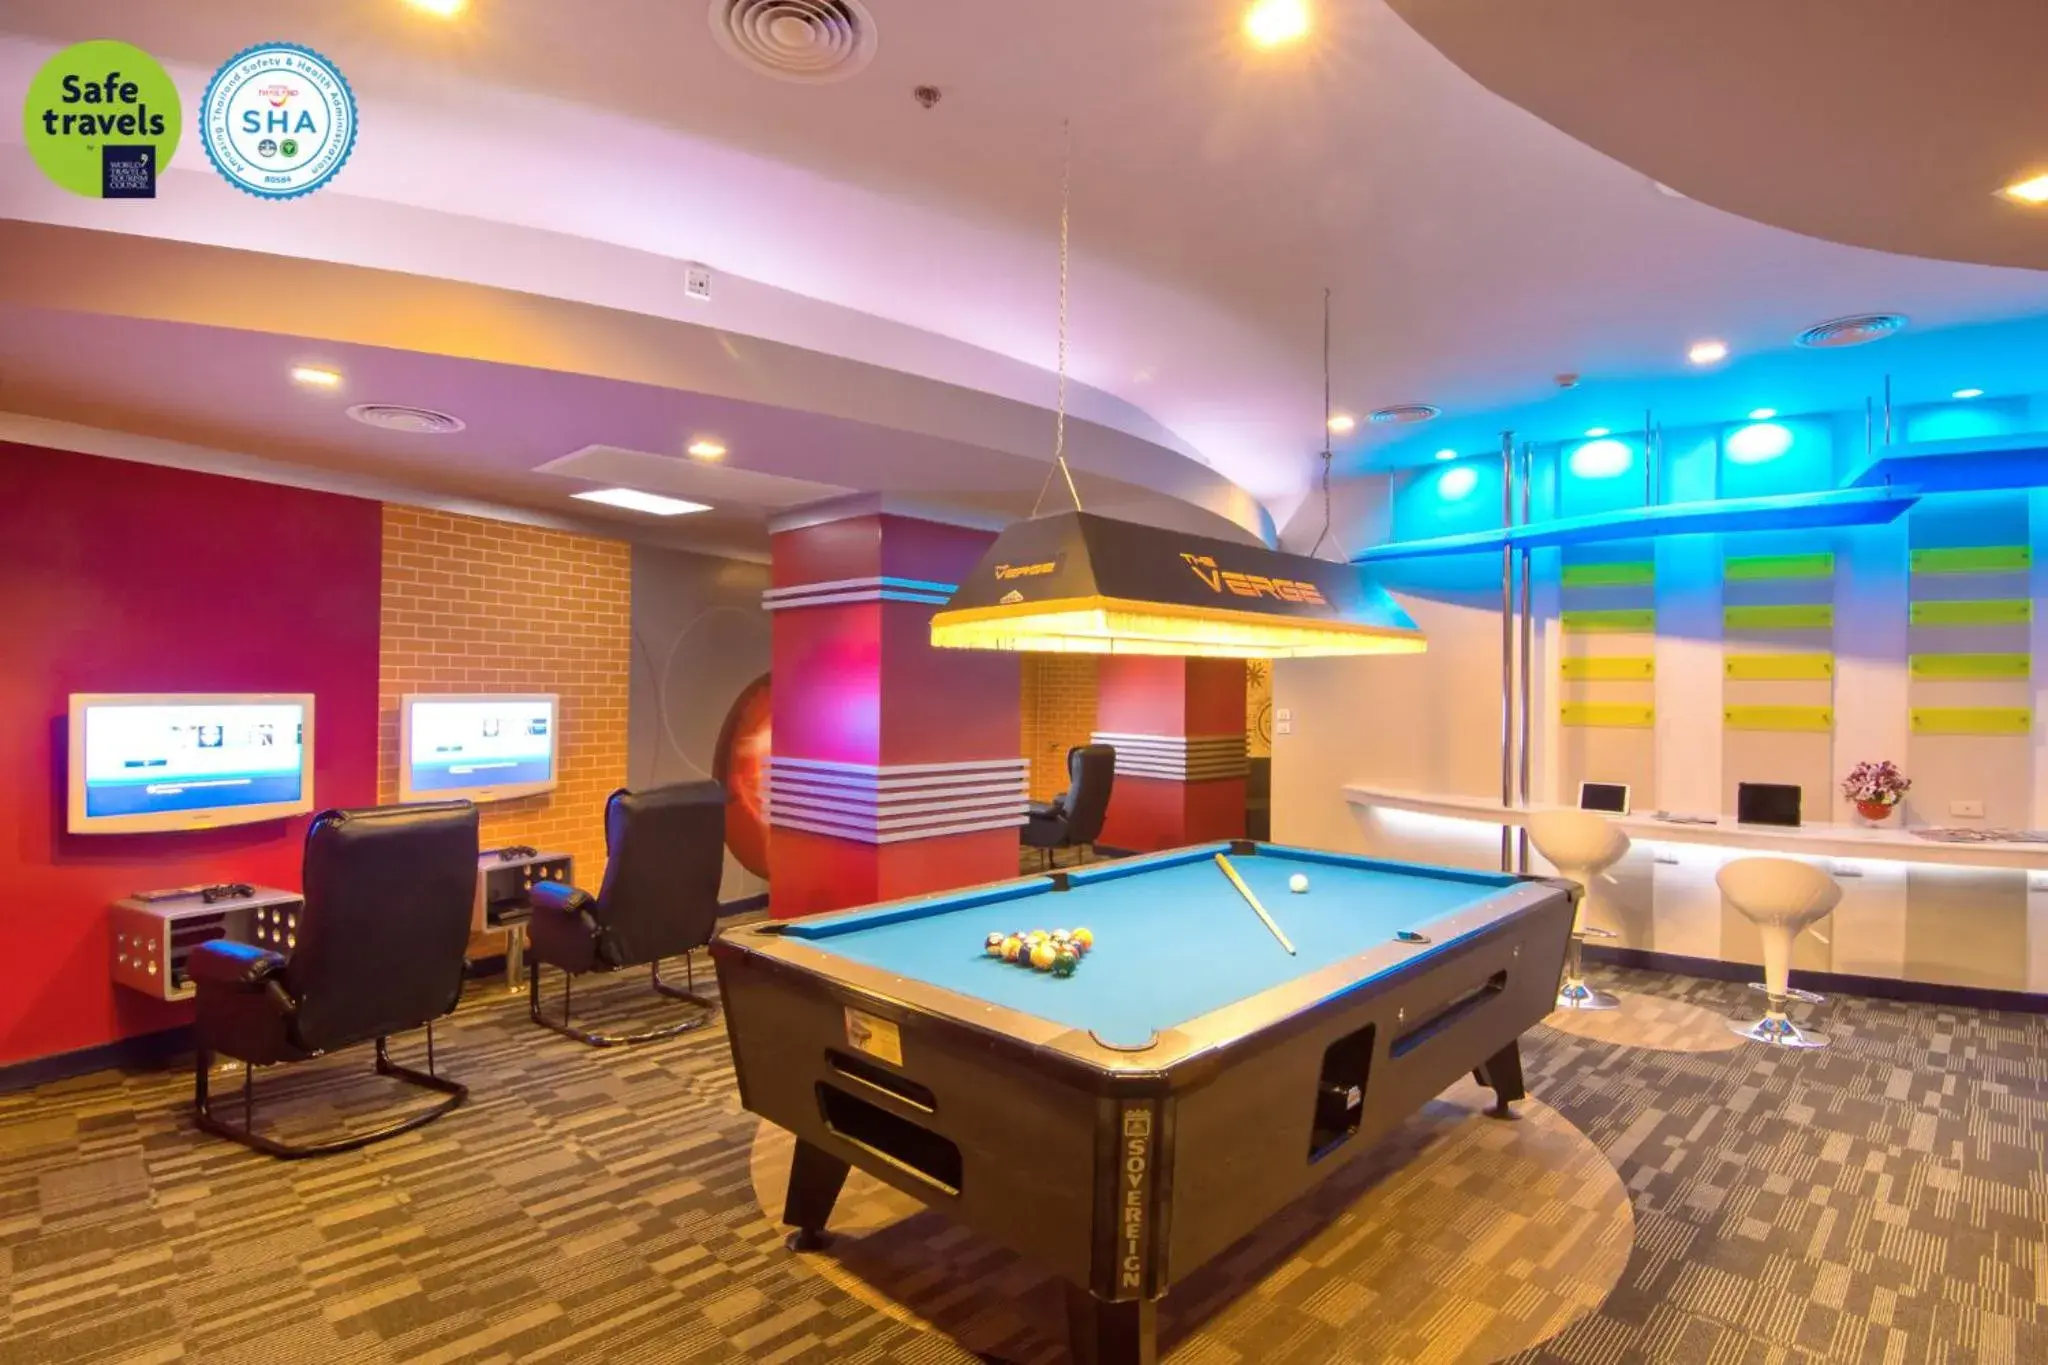 Game Room, Billiards in Royal Cliff Grand Hotel Pattaya